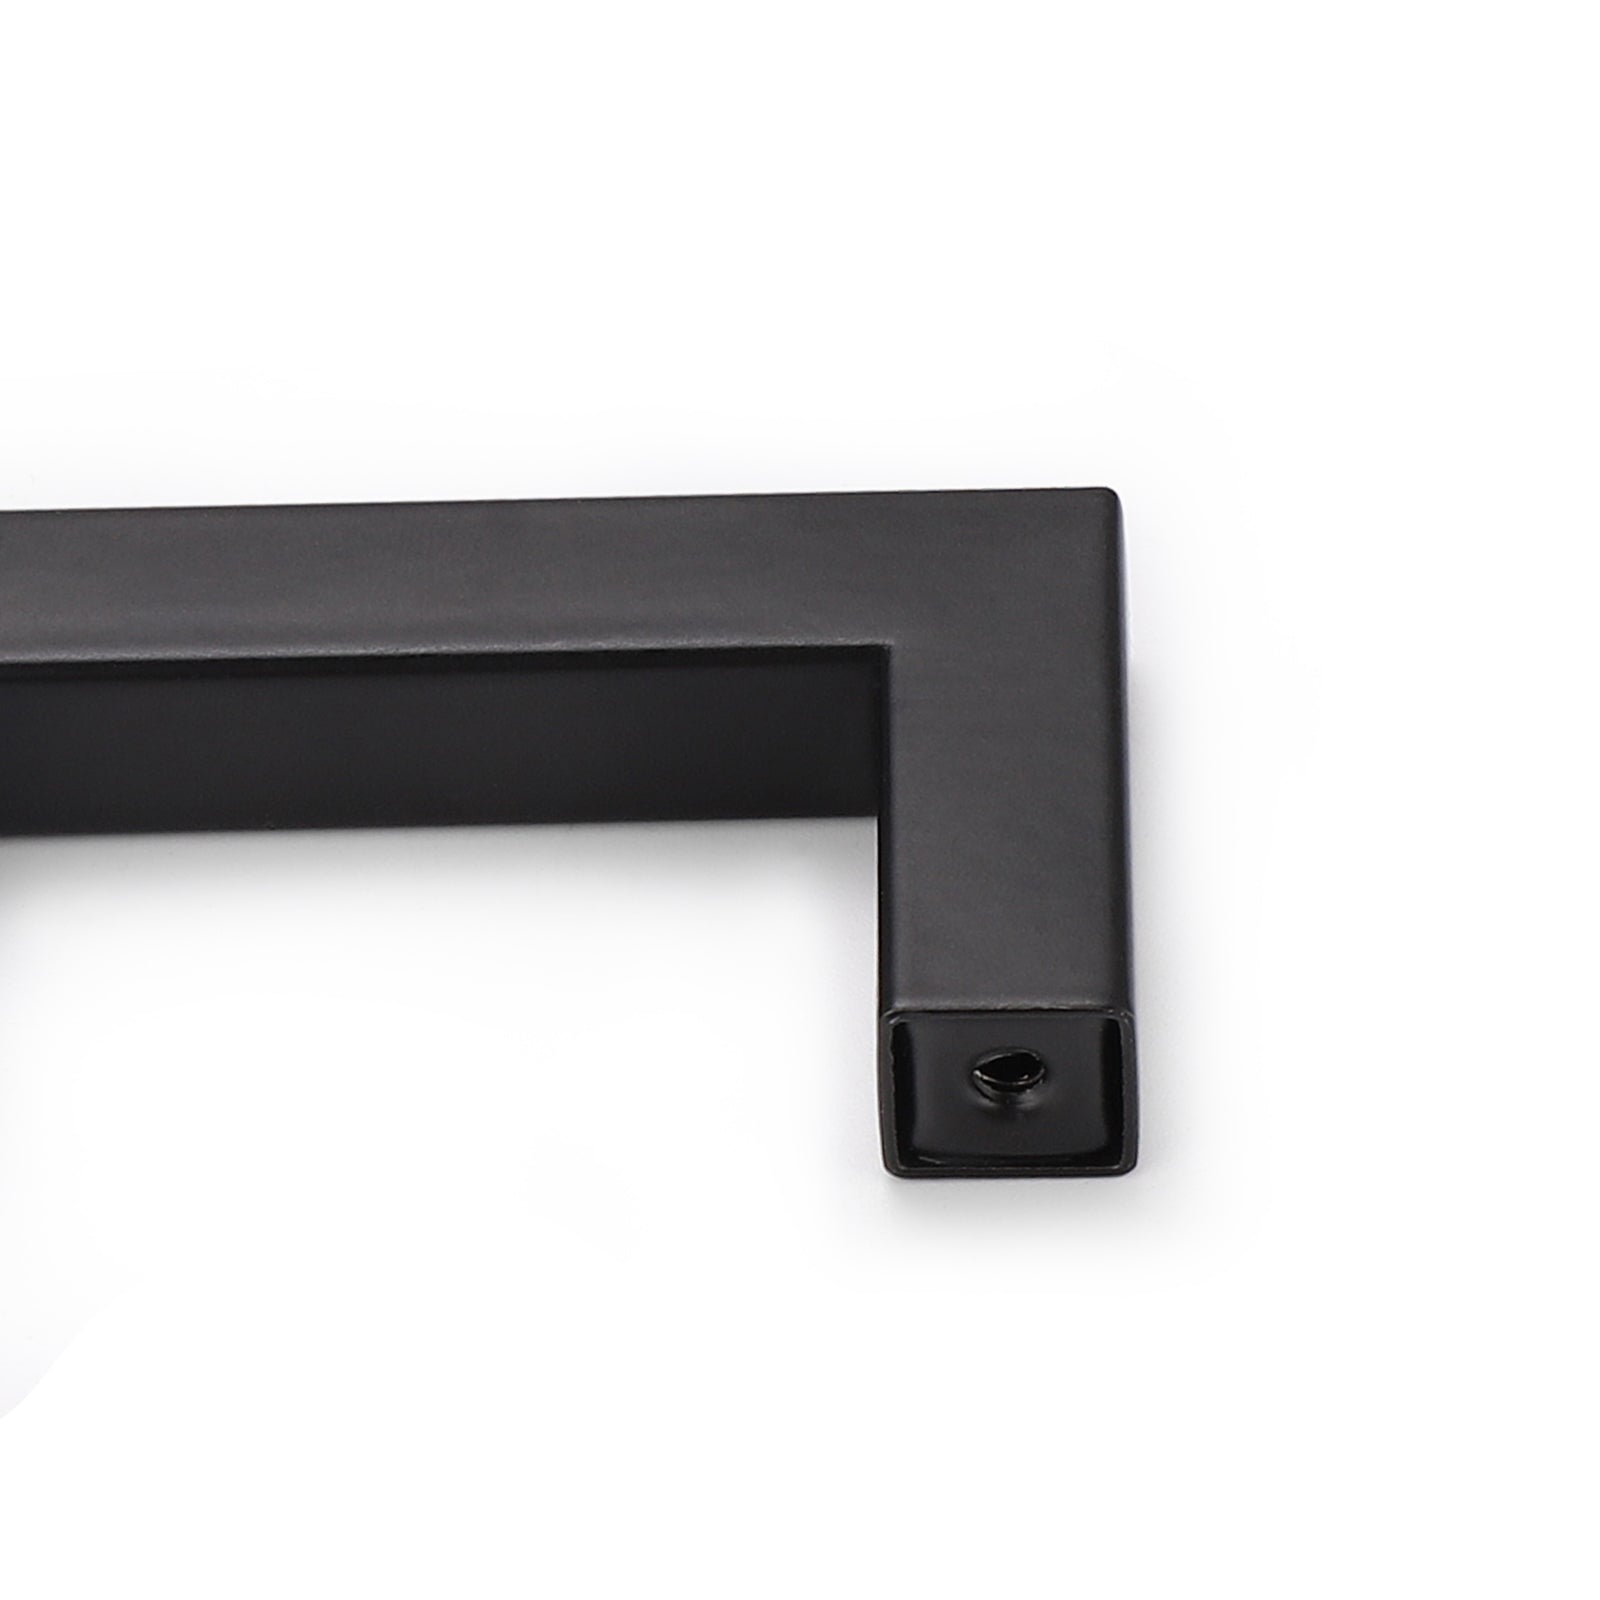 1/2" Square Cabinet Handles Black Finish 160mm 6 3/10inch Hole Centers PDDJS12HBK160